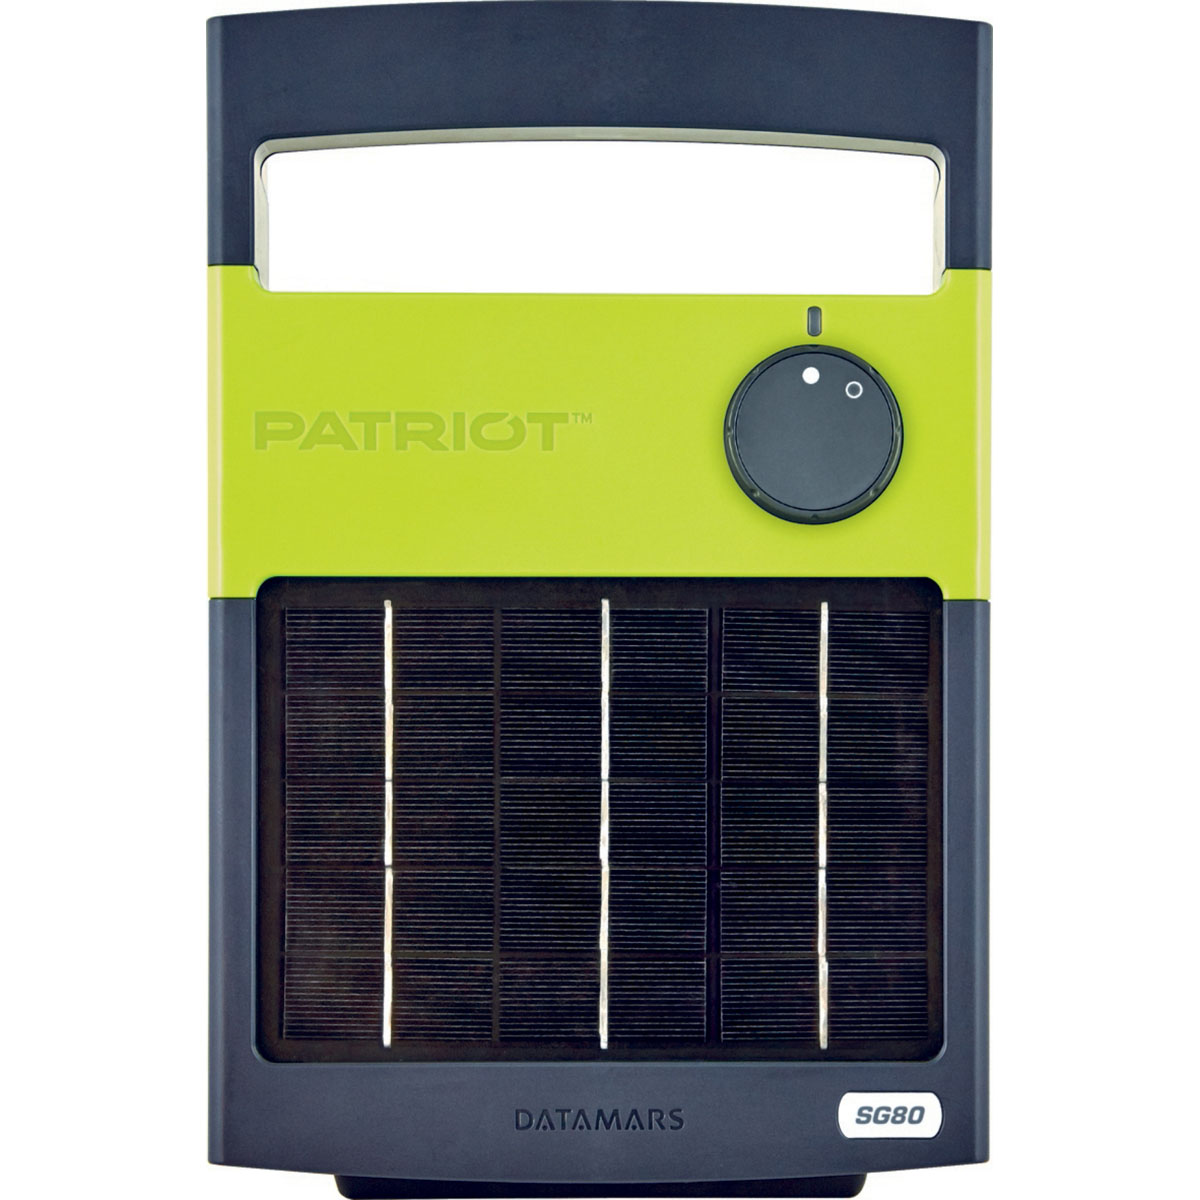 PATRIOT SolarGuard 80 834373 Solar Fence Energizer, 0.08 J Output Energy, 3.2 kV Output, 3 miles Fence Distance